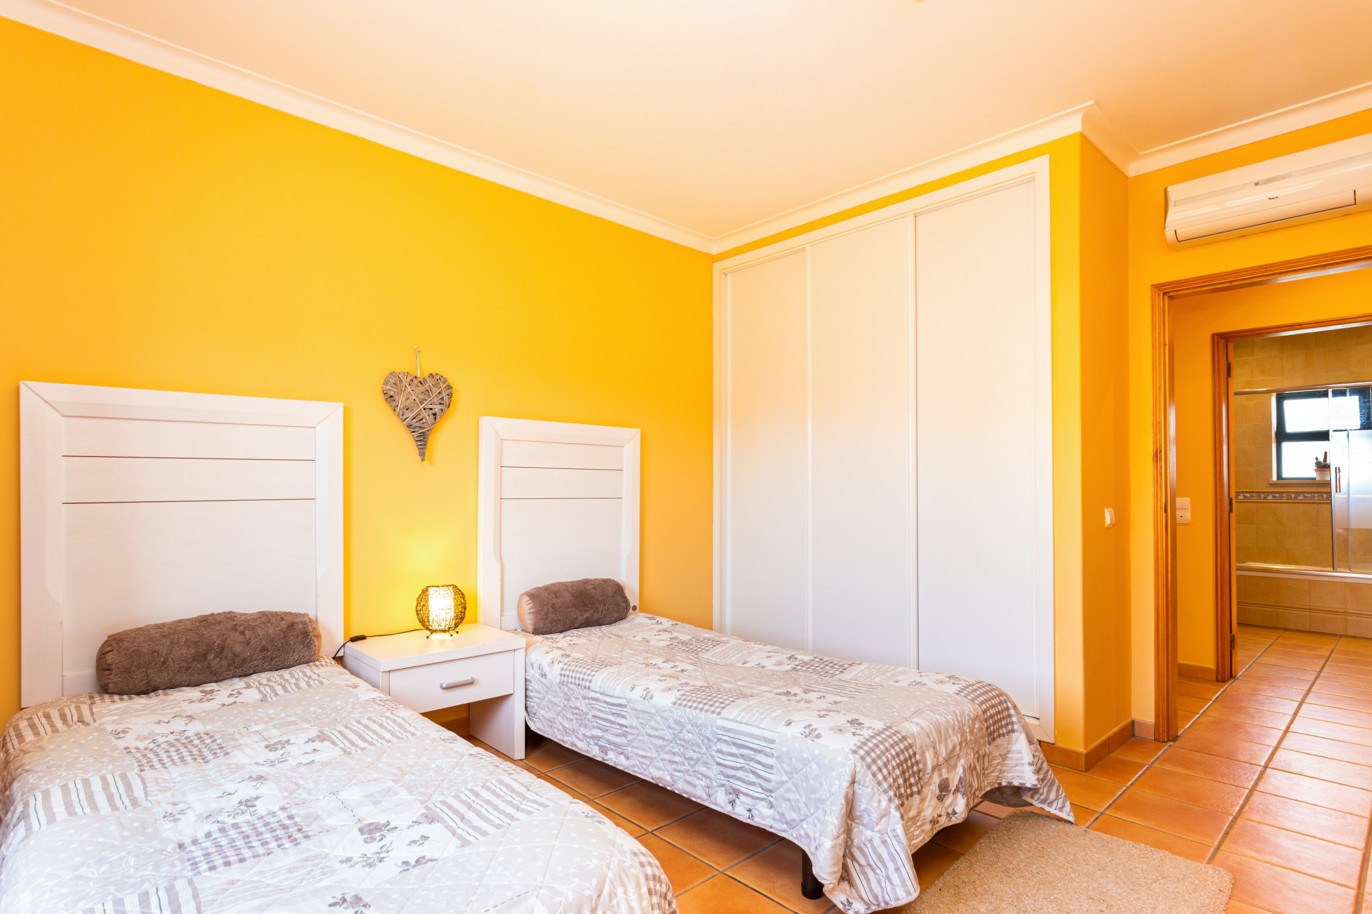 5 Bedroom Villa with 2 Bedroom Annex, for sale, in Alvor, Algarve_220969